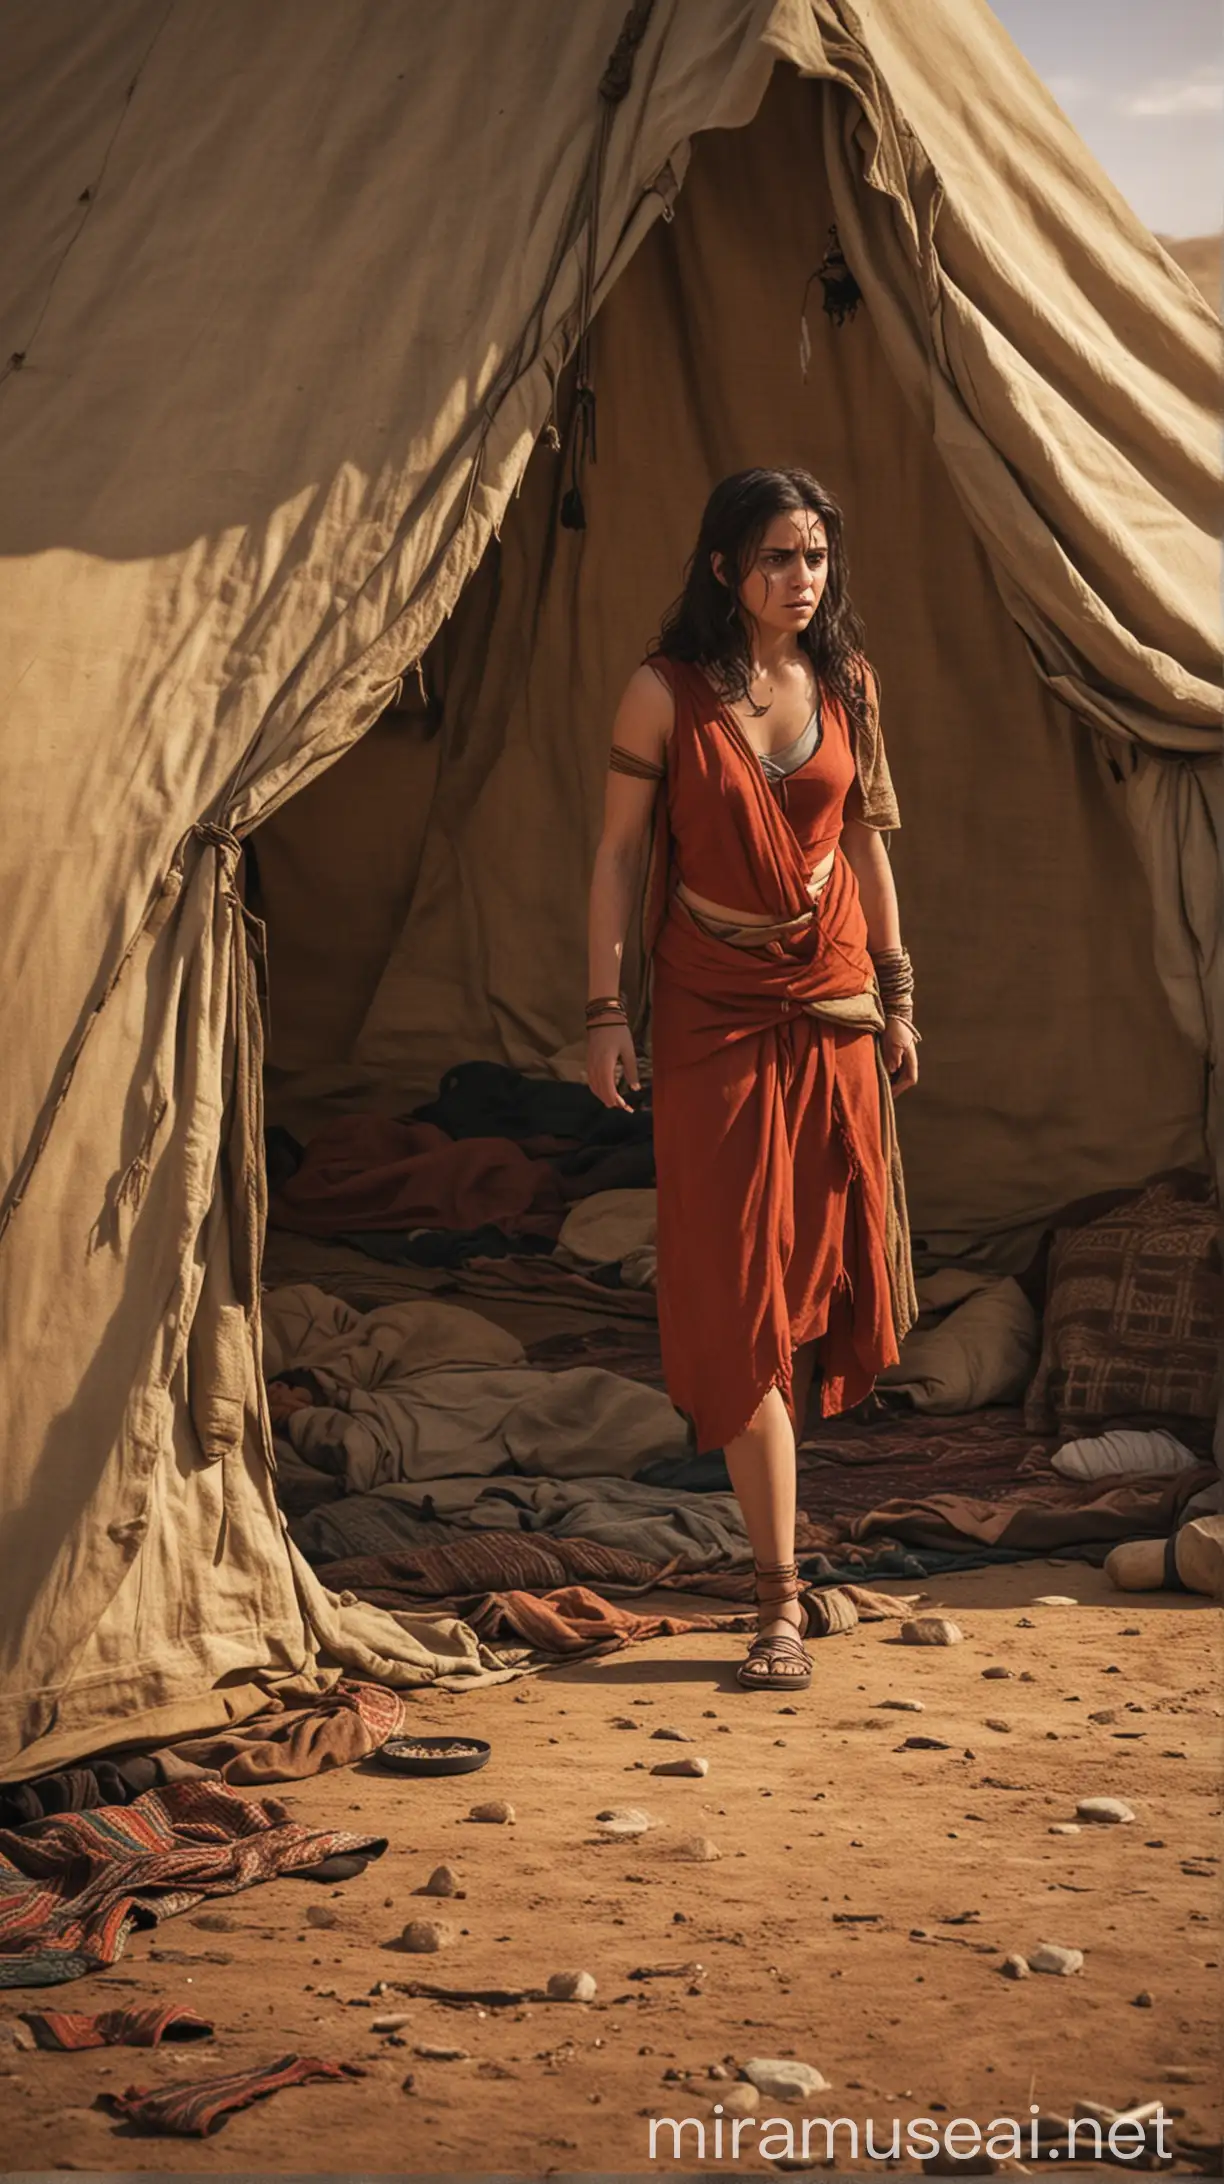 Desperate Sisera seeks refuge at Jaels tent